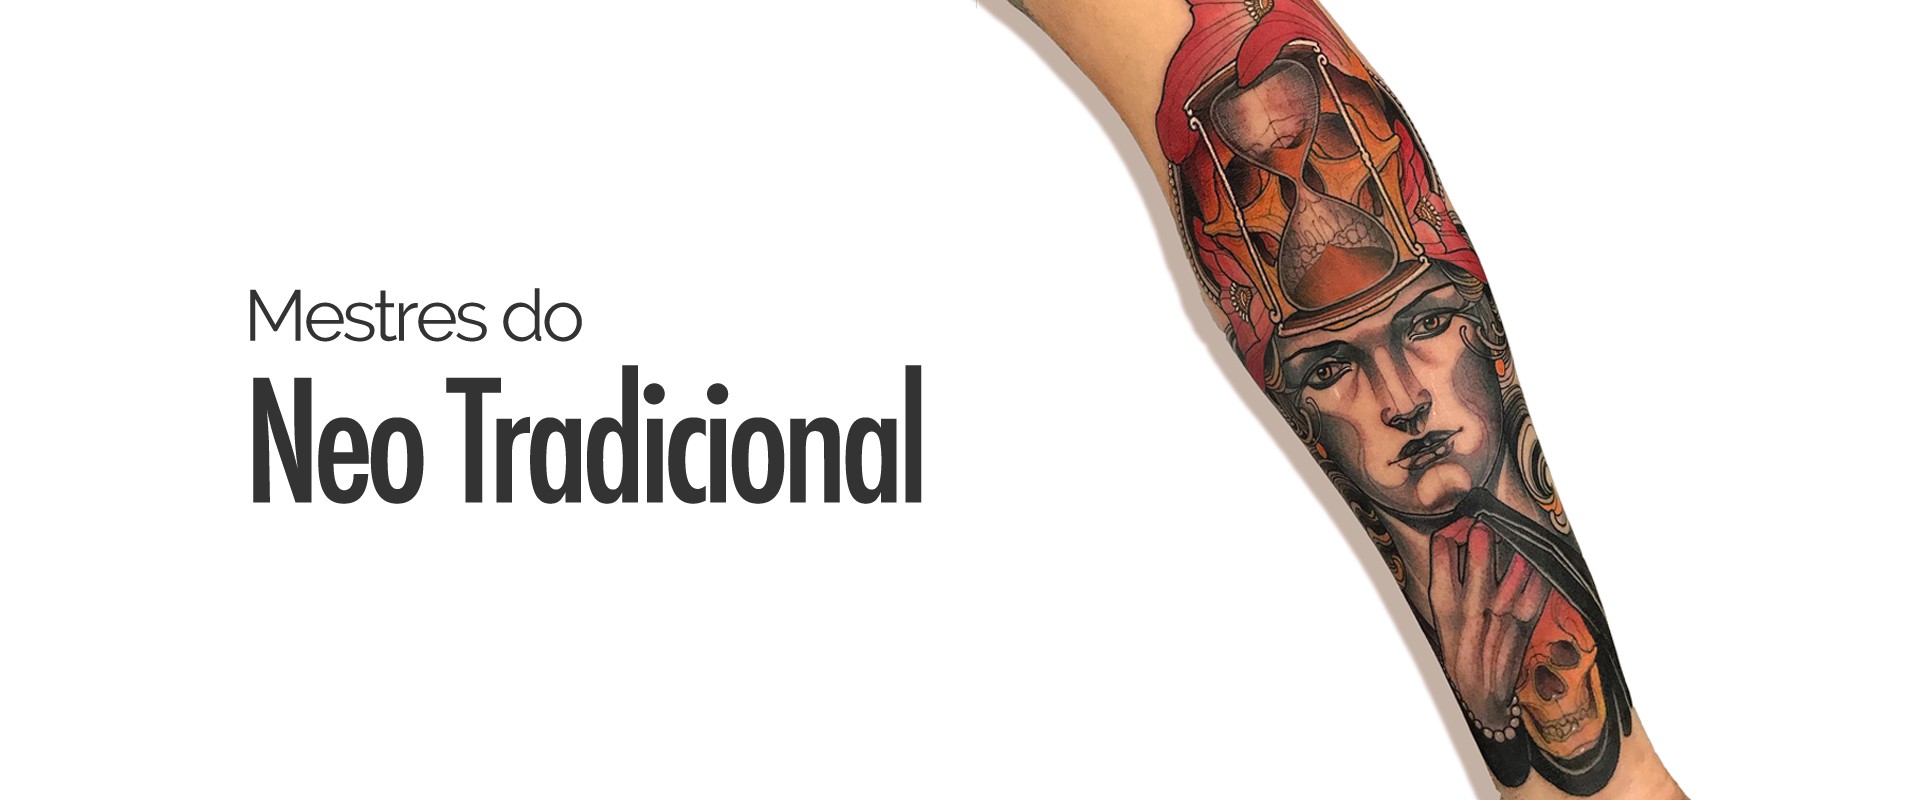 Neo Tradicional: os mestres do estilo - Blog Tattoo2me